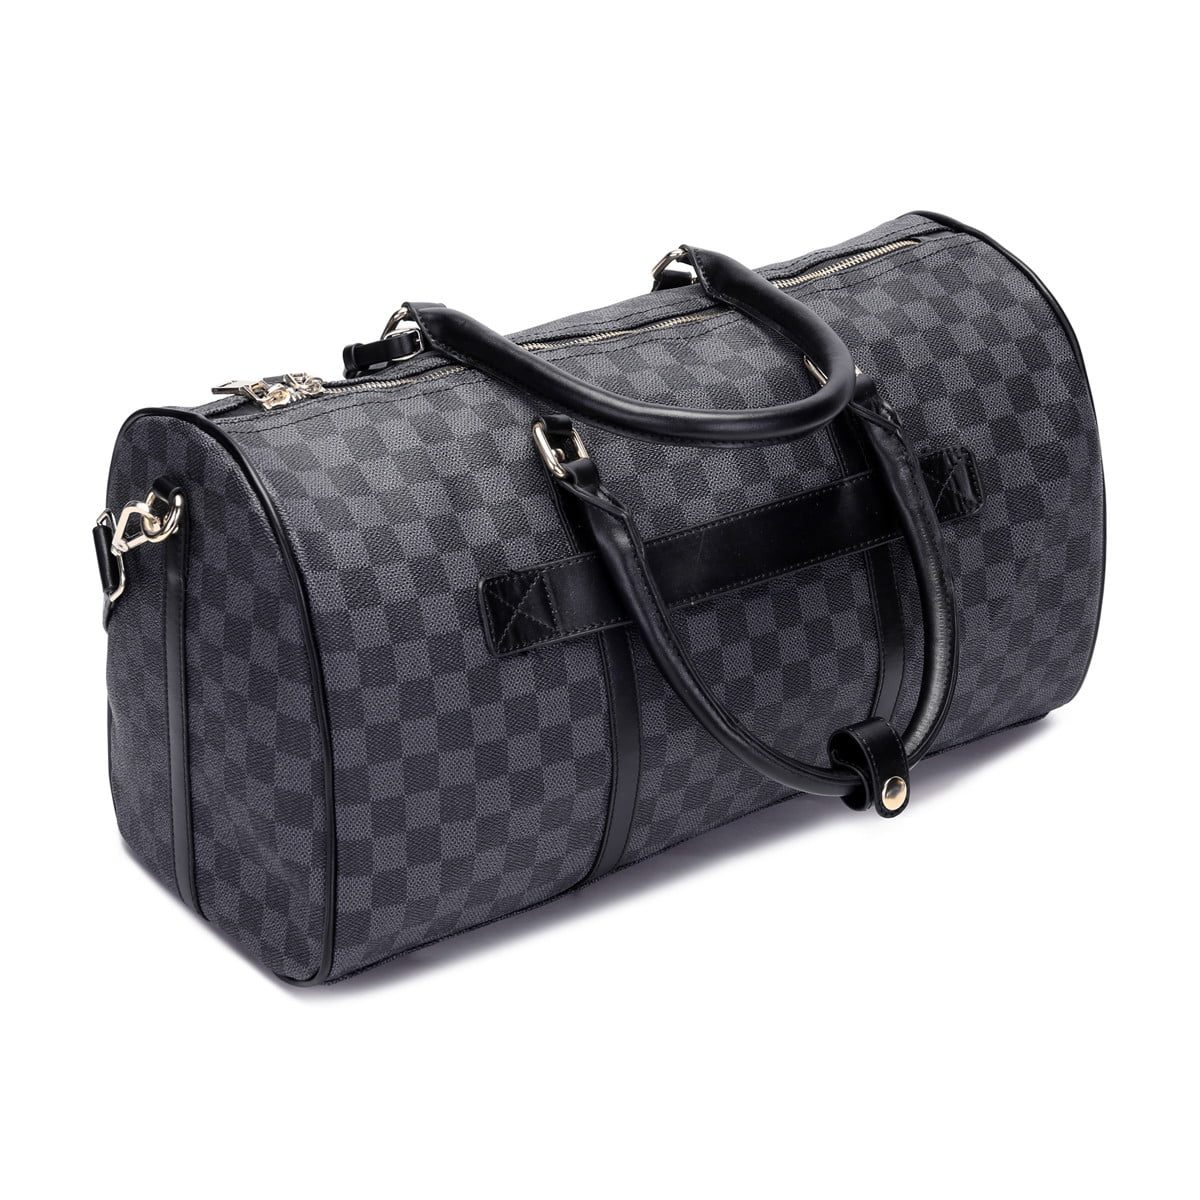 TWENTY FOUR Checkered Weekender Bags Leather Travel Duffel